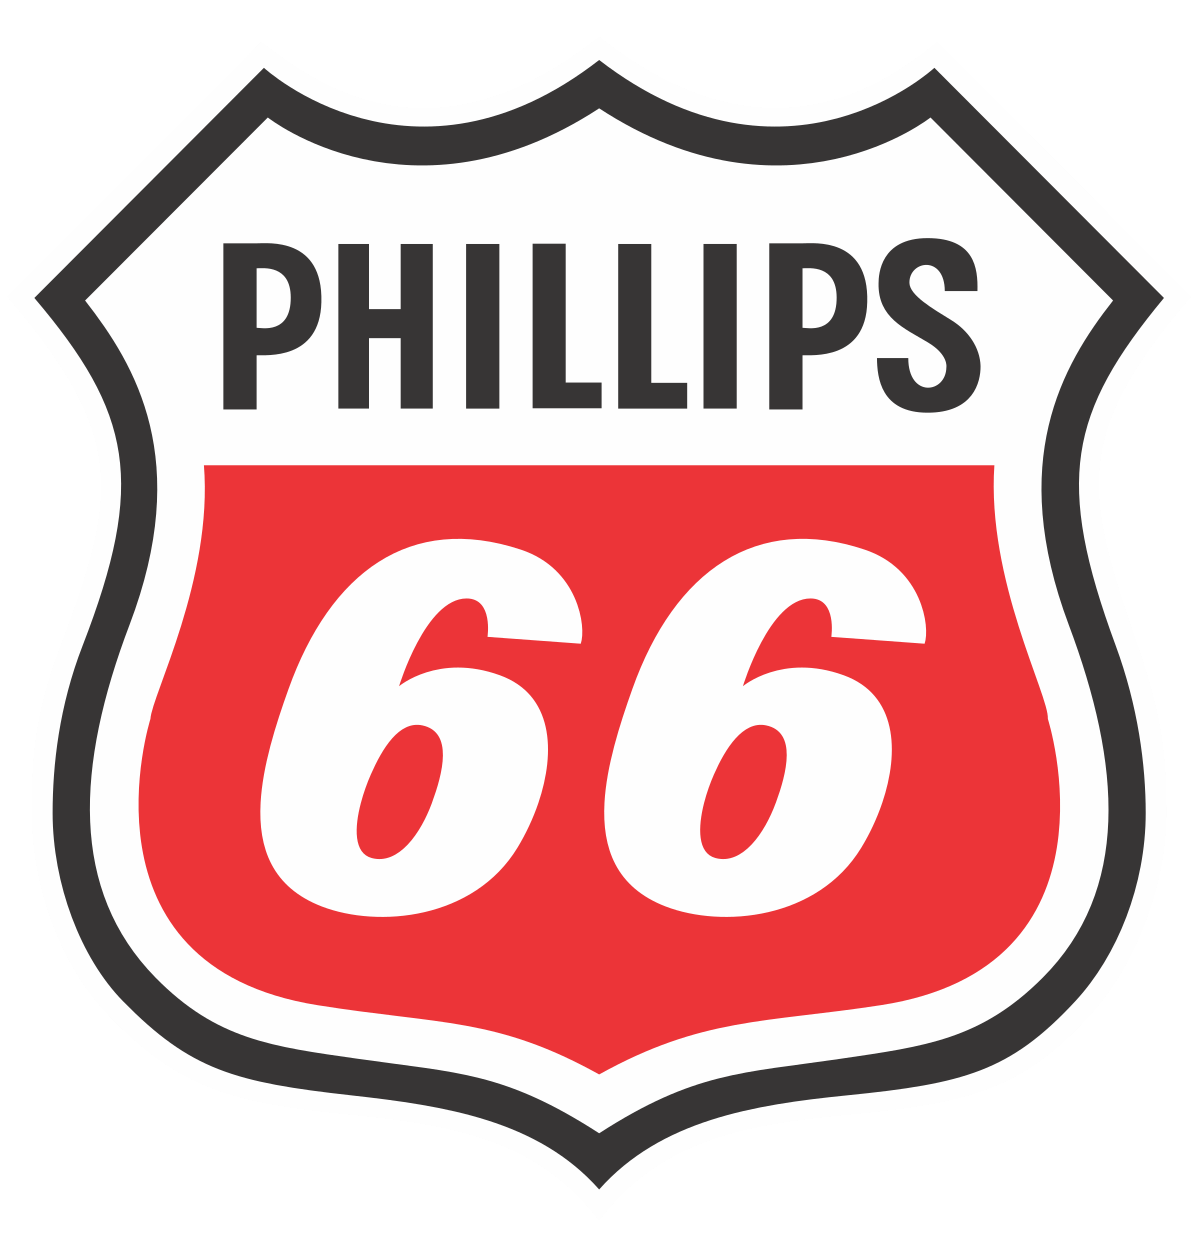 New Philips Shield Logo - Phillips 66